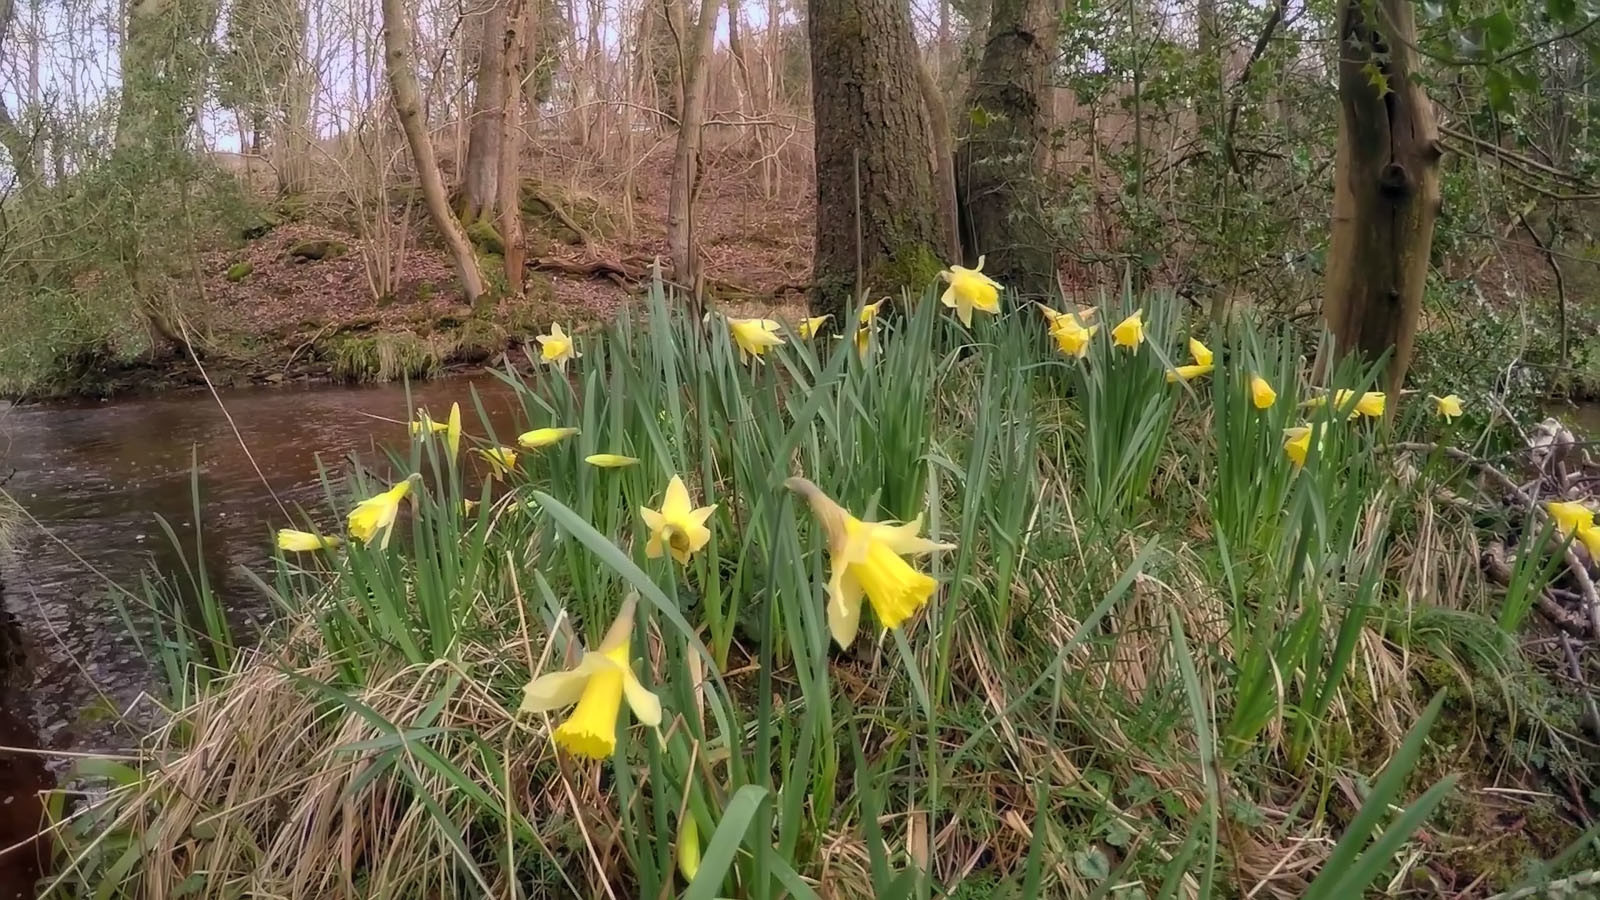 Wild daffodils in April